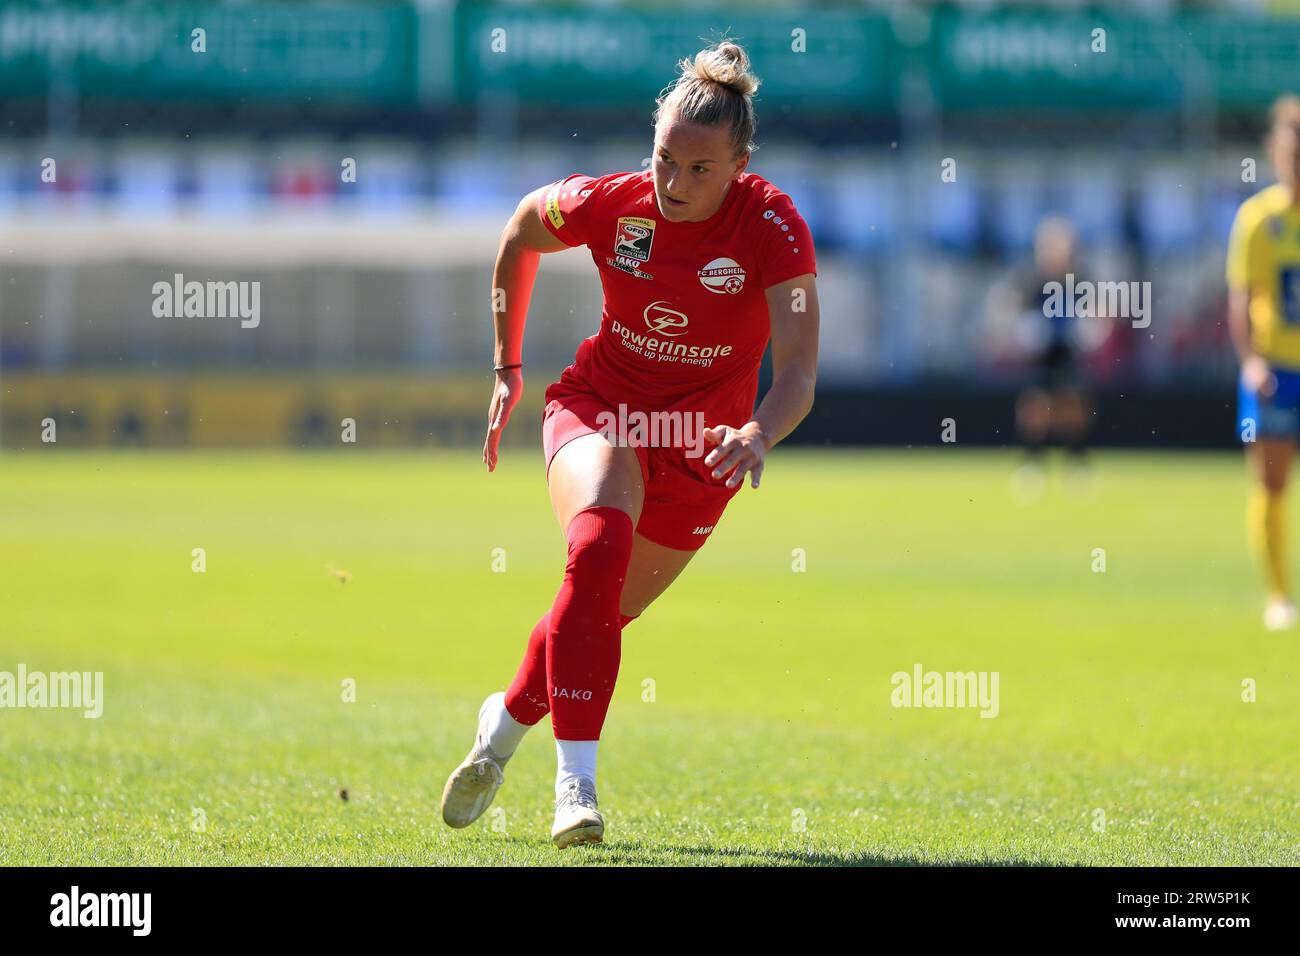 Elisabeth Strocker (16 Bergheim) in action during the Admiral Frauen Bundesliga match Vienna vs Bergheim at Hohe Warte (Tom Seiss/ SPP) Credit: SPP Sport Press Photo. /Alamy Live News Stock Photo